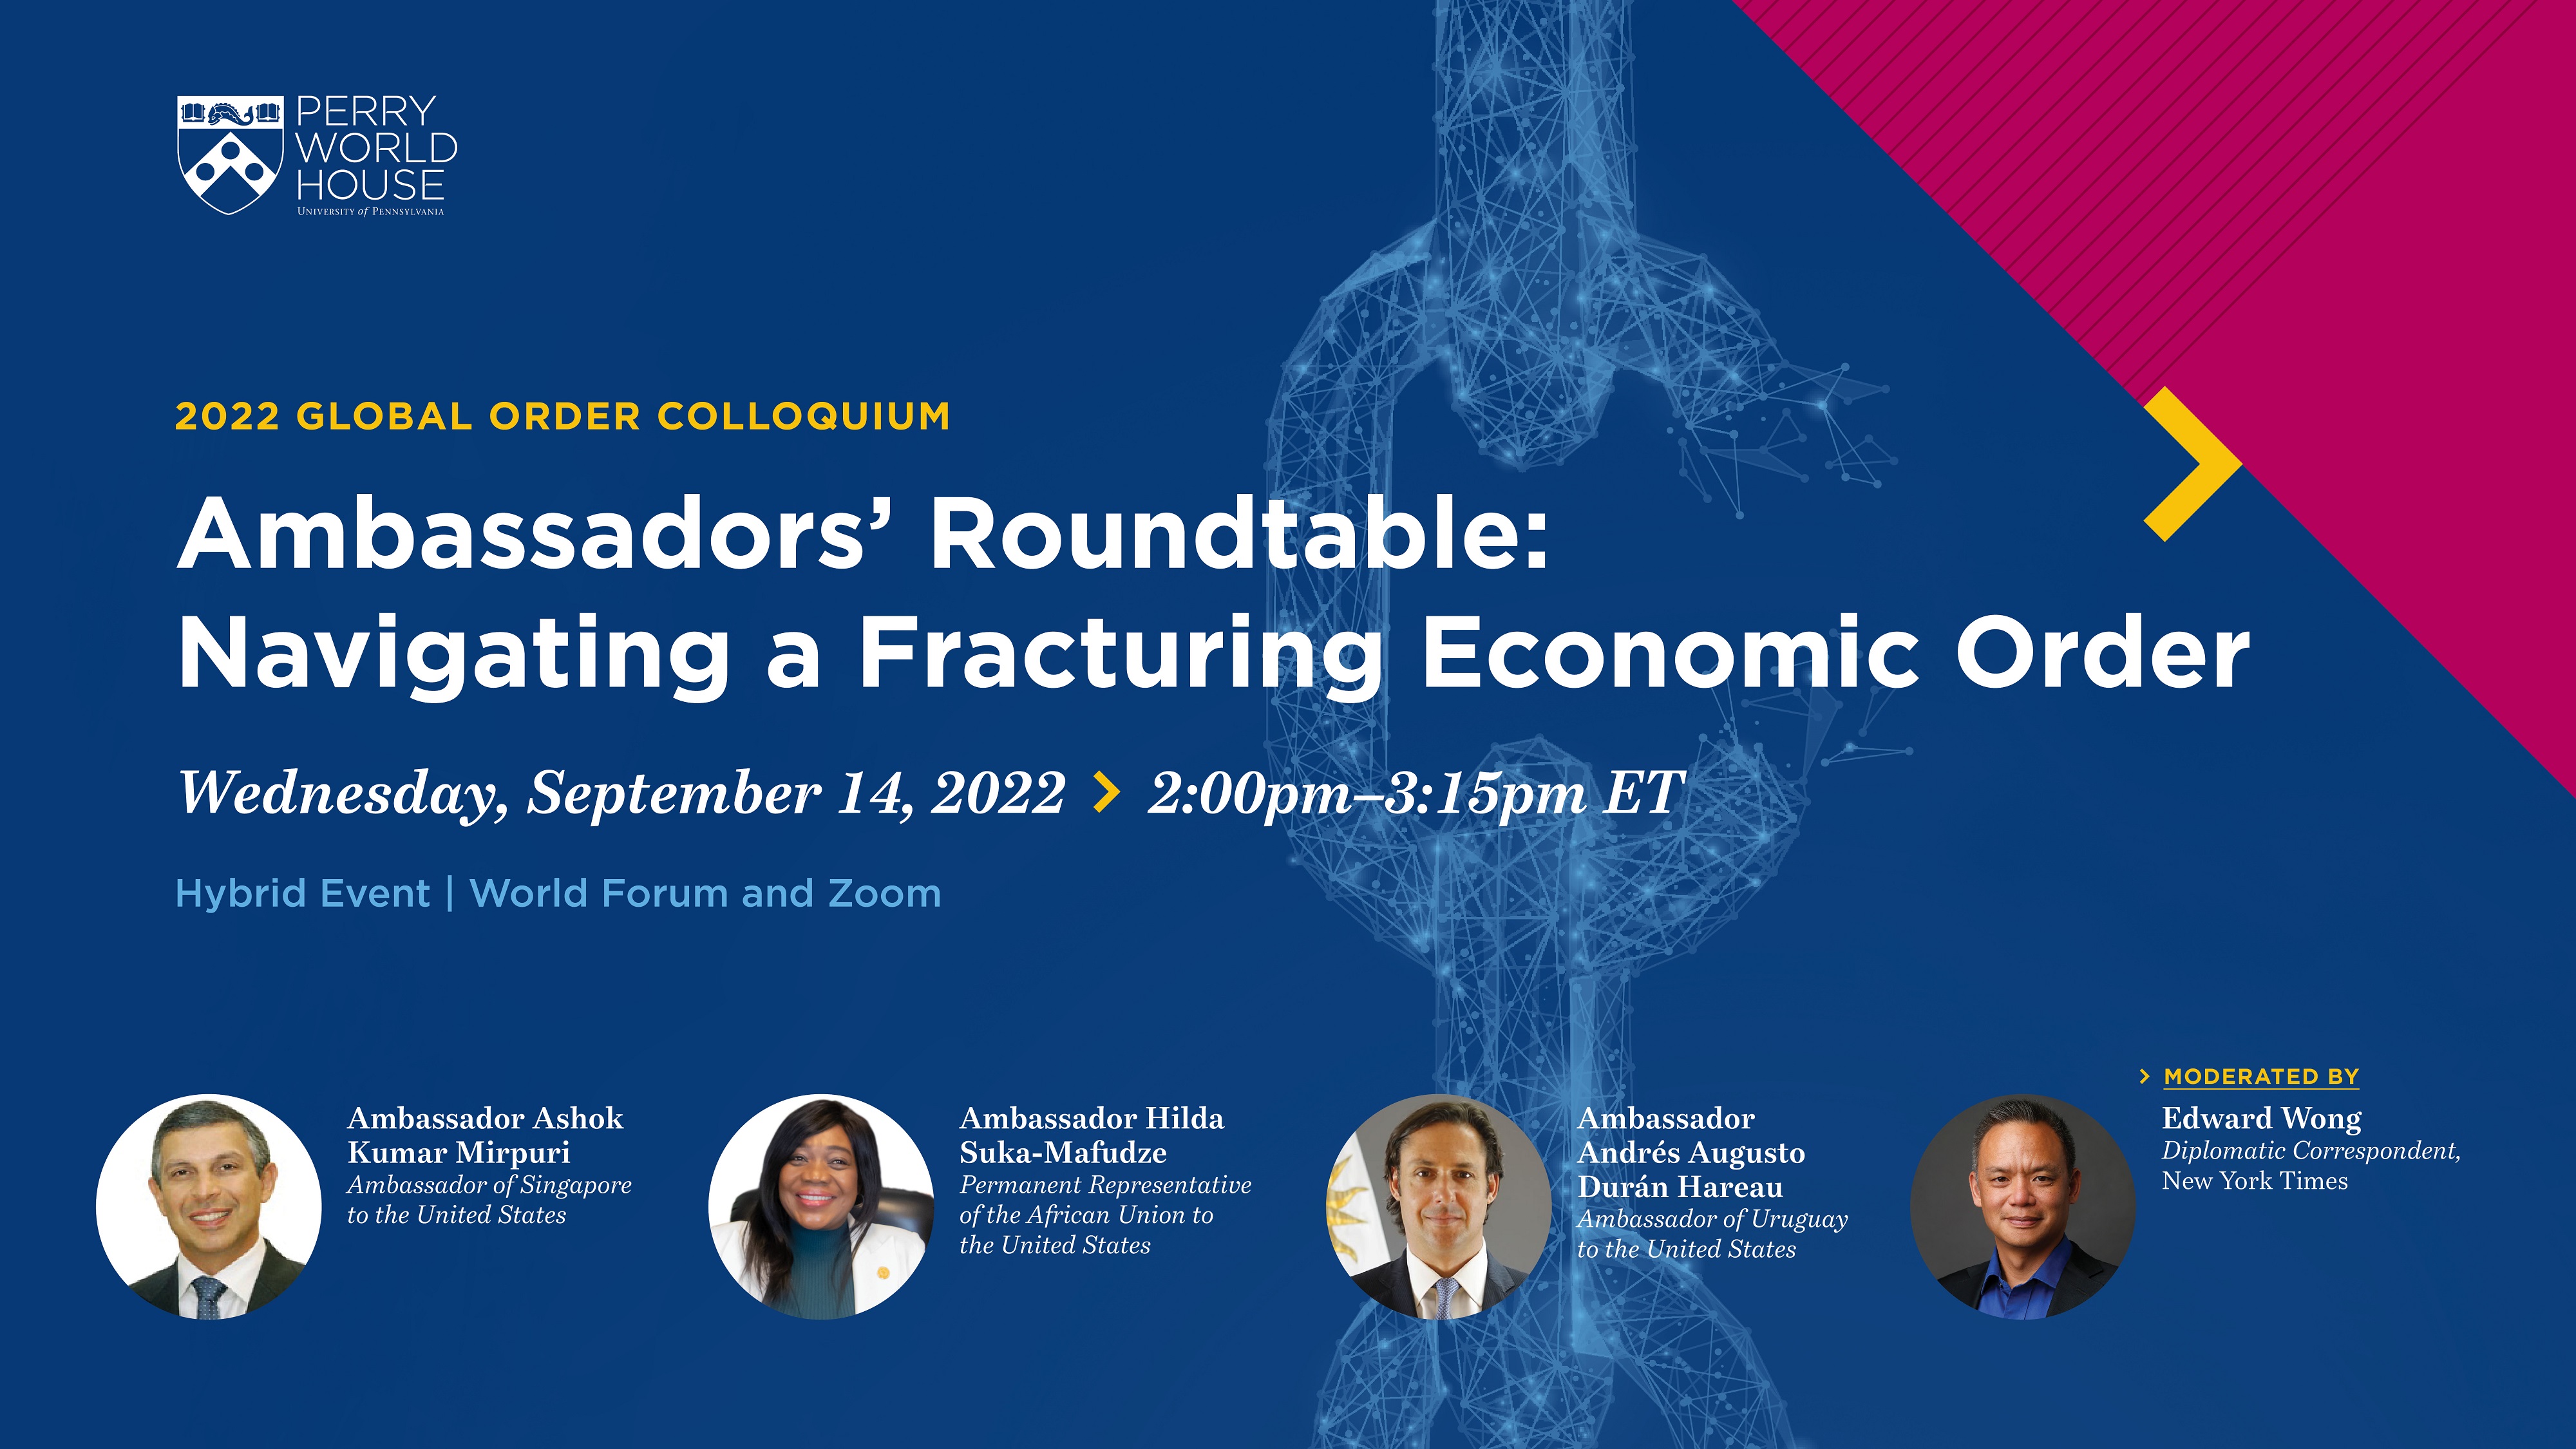 Ambassadors' Roundtable: Navigating a Fracturing Economic Order